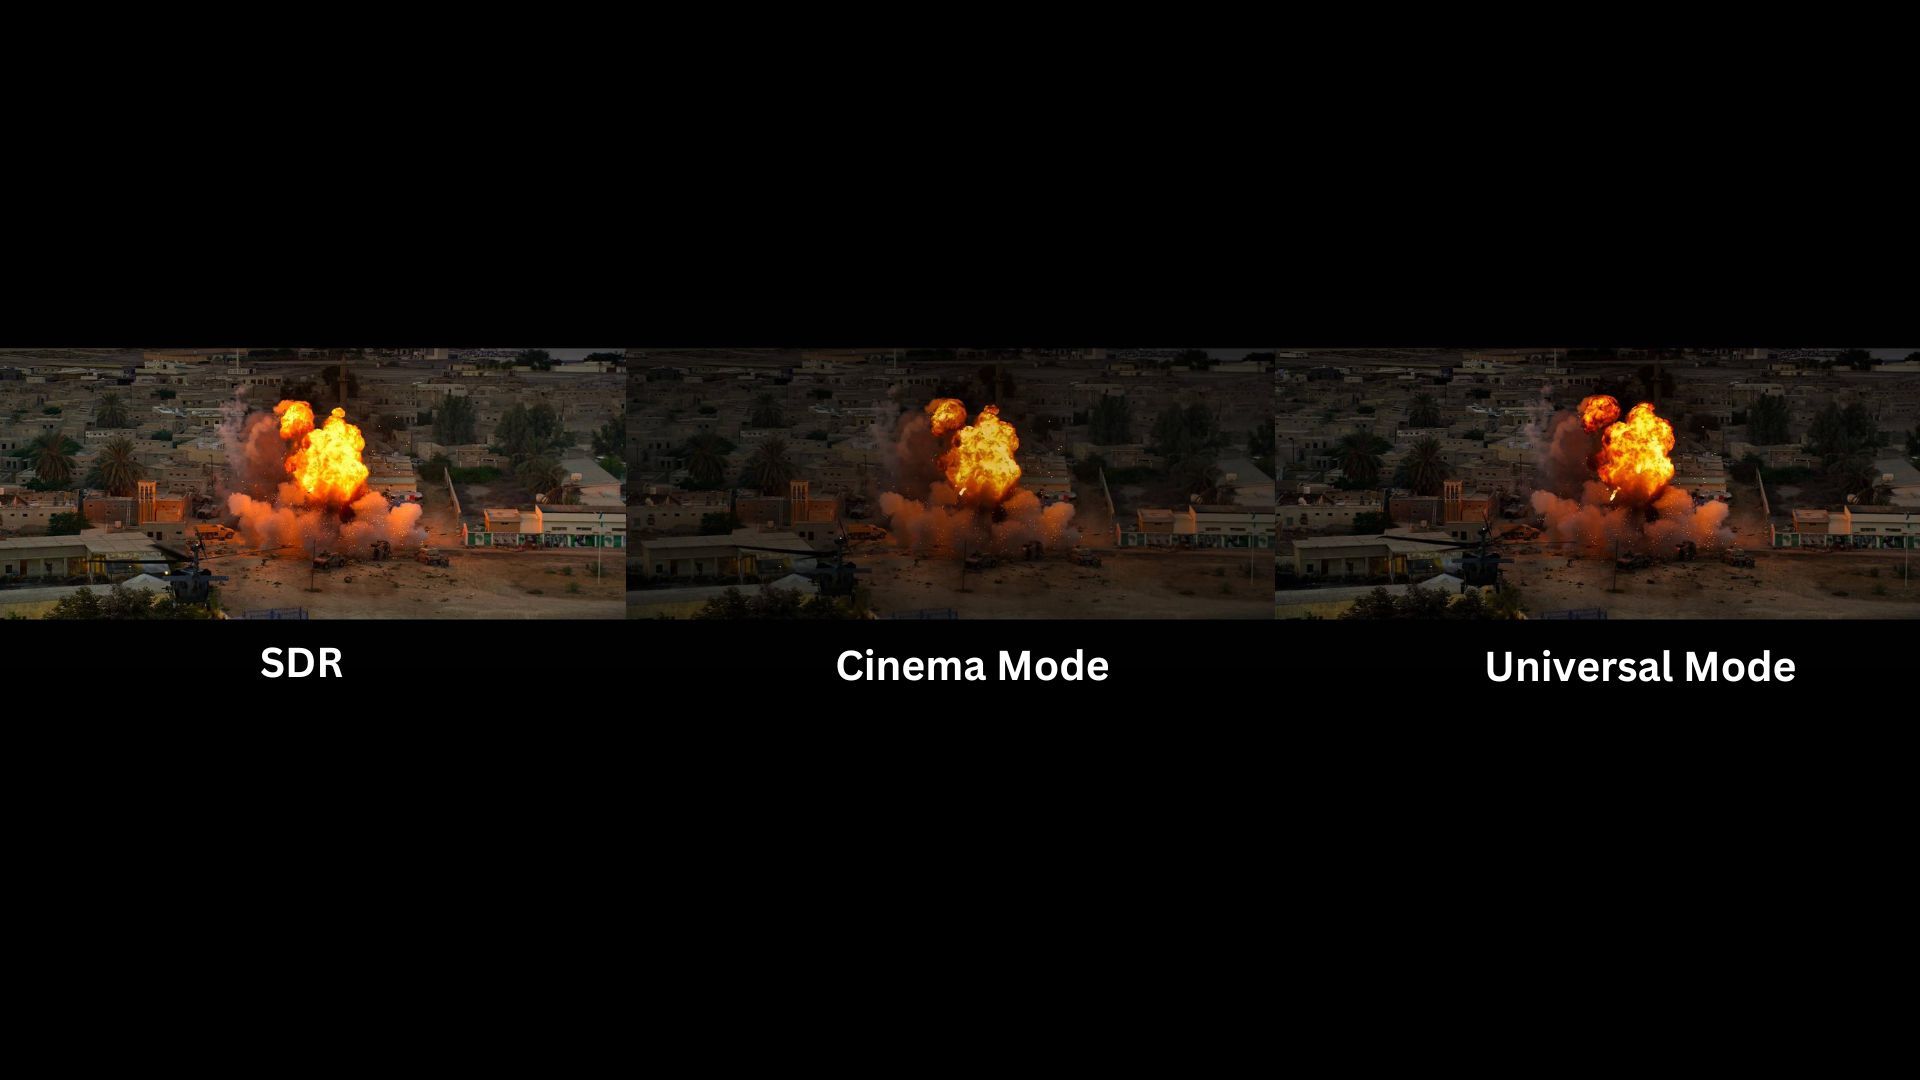 Universal and Cinema modes